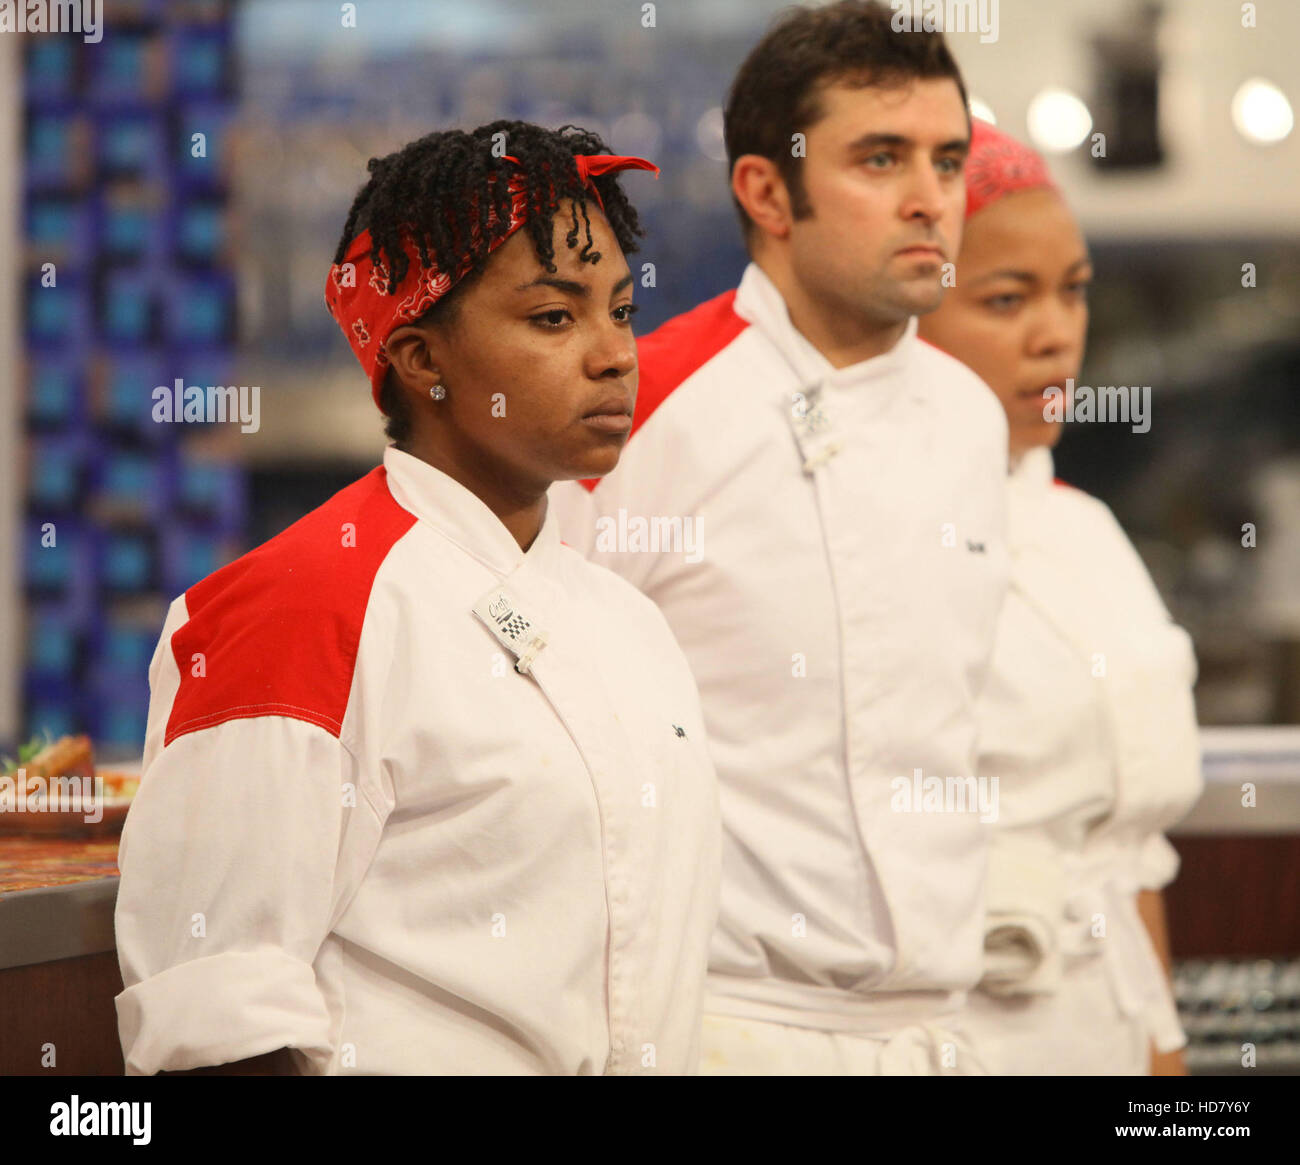 https://c8.alamy.com/comp/HD7Y6Y/hells-kitchen-from-left-chef-contestants-joy-parham-thomas-scott-commings-HD7Y6Y.jpg